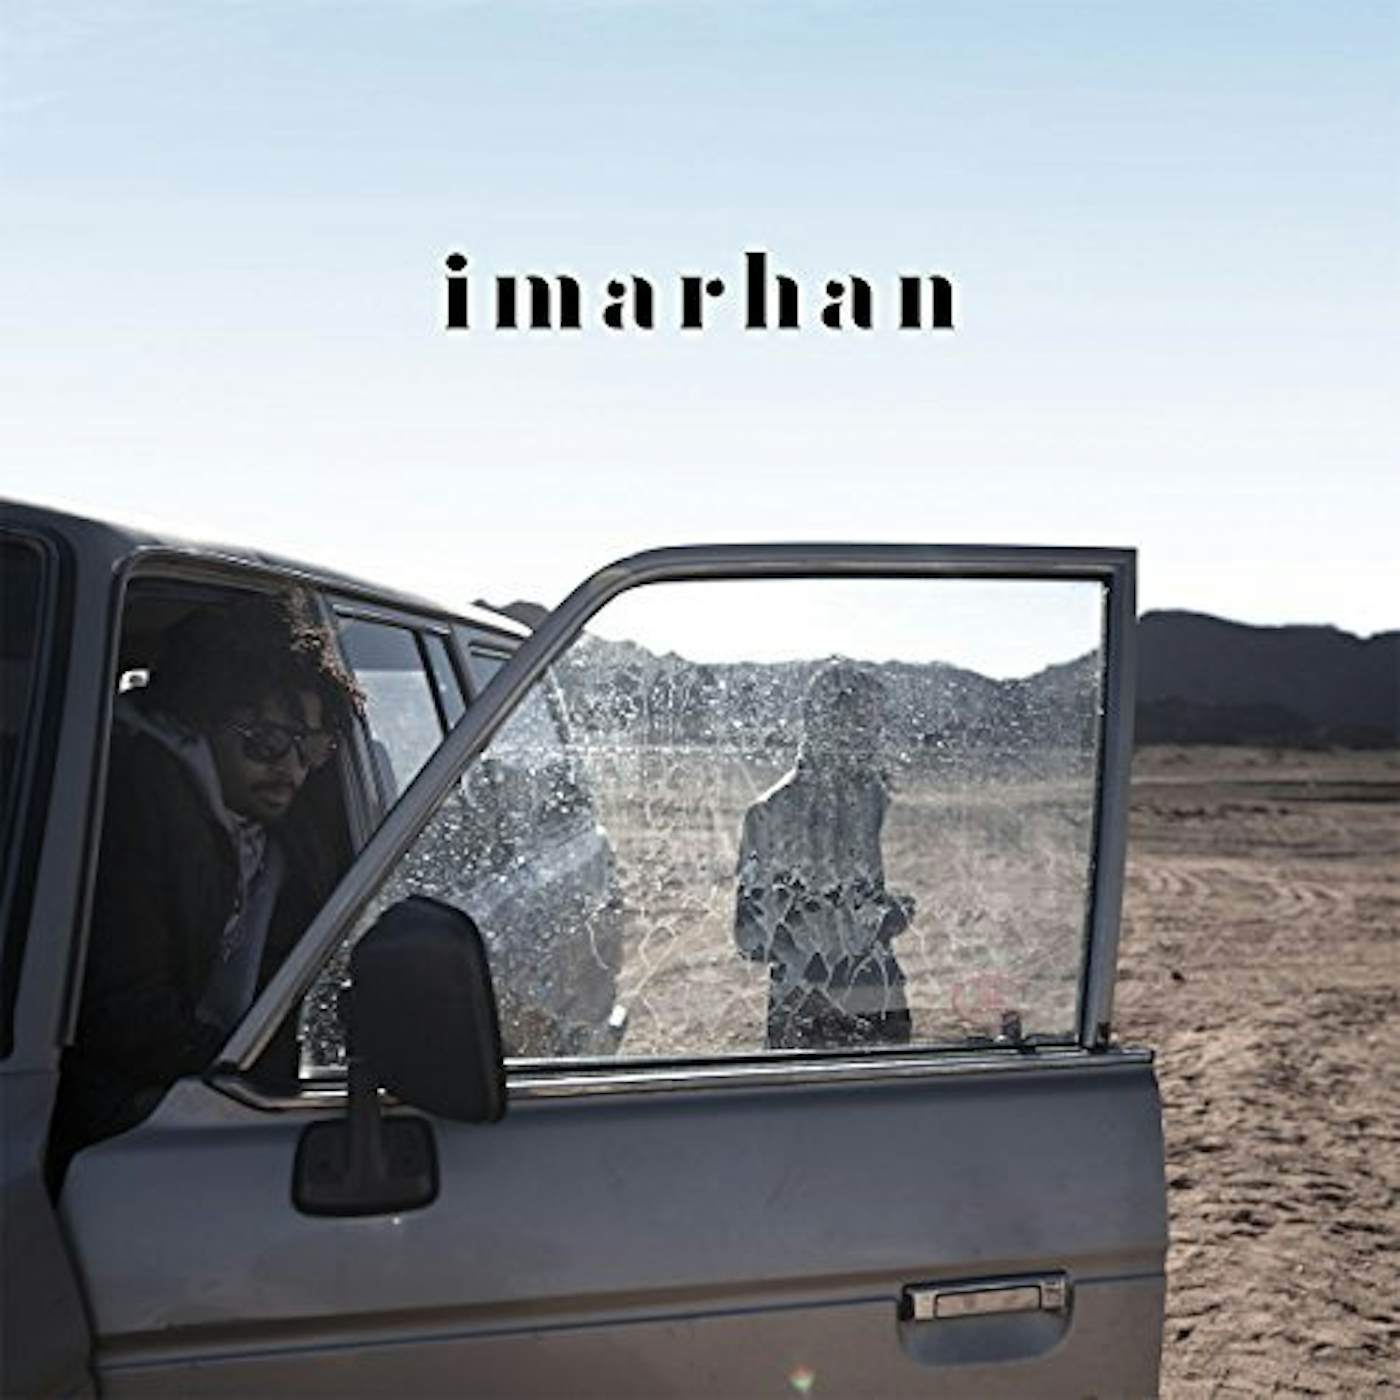 Imarhan Vinyl Record